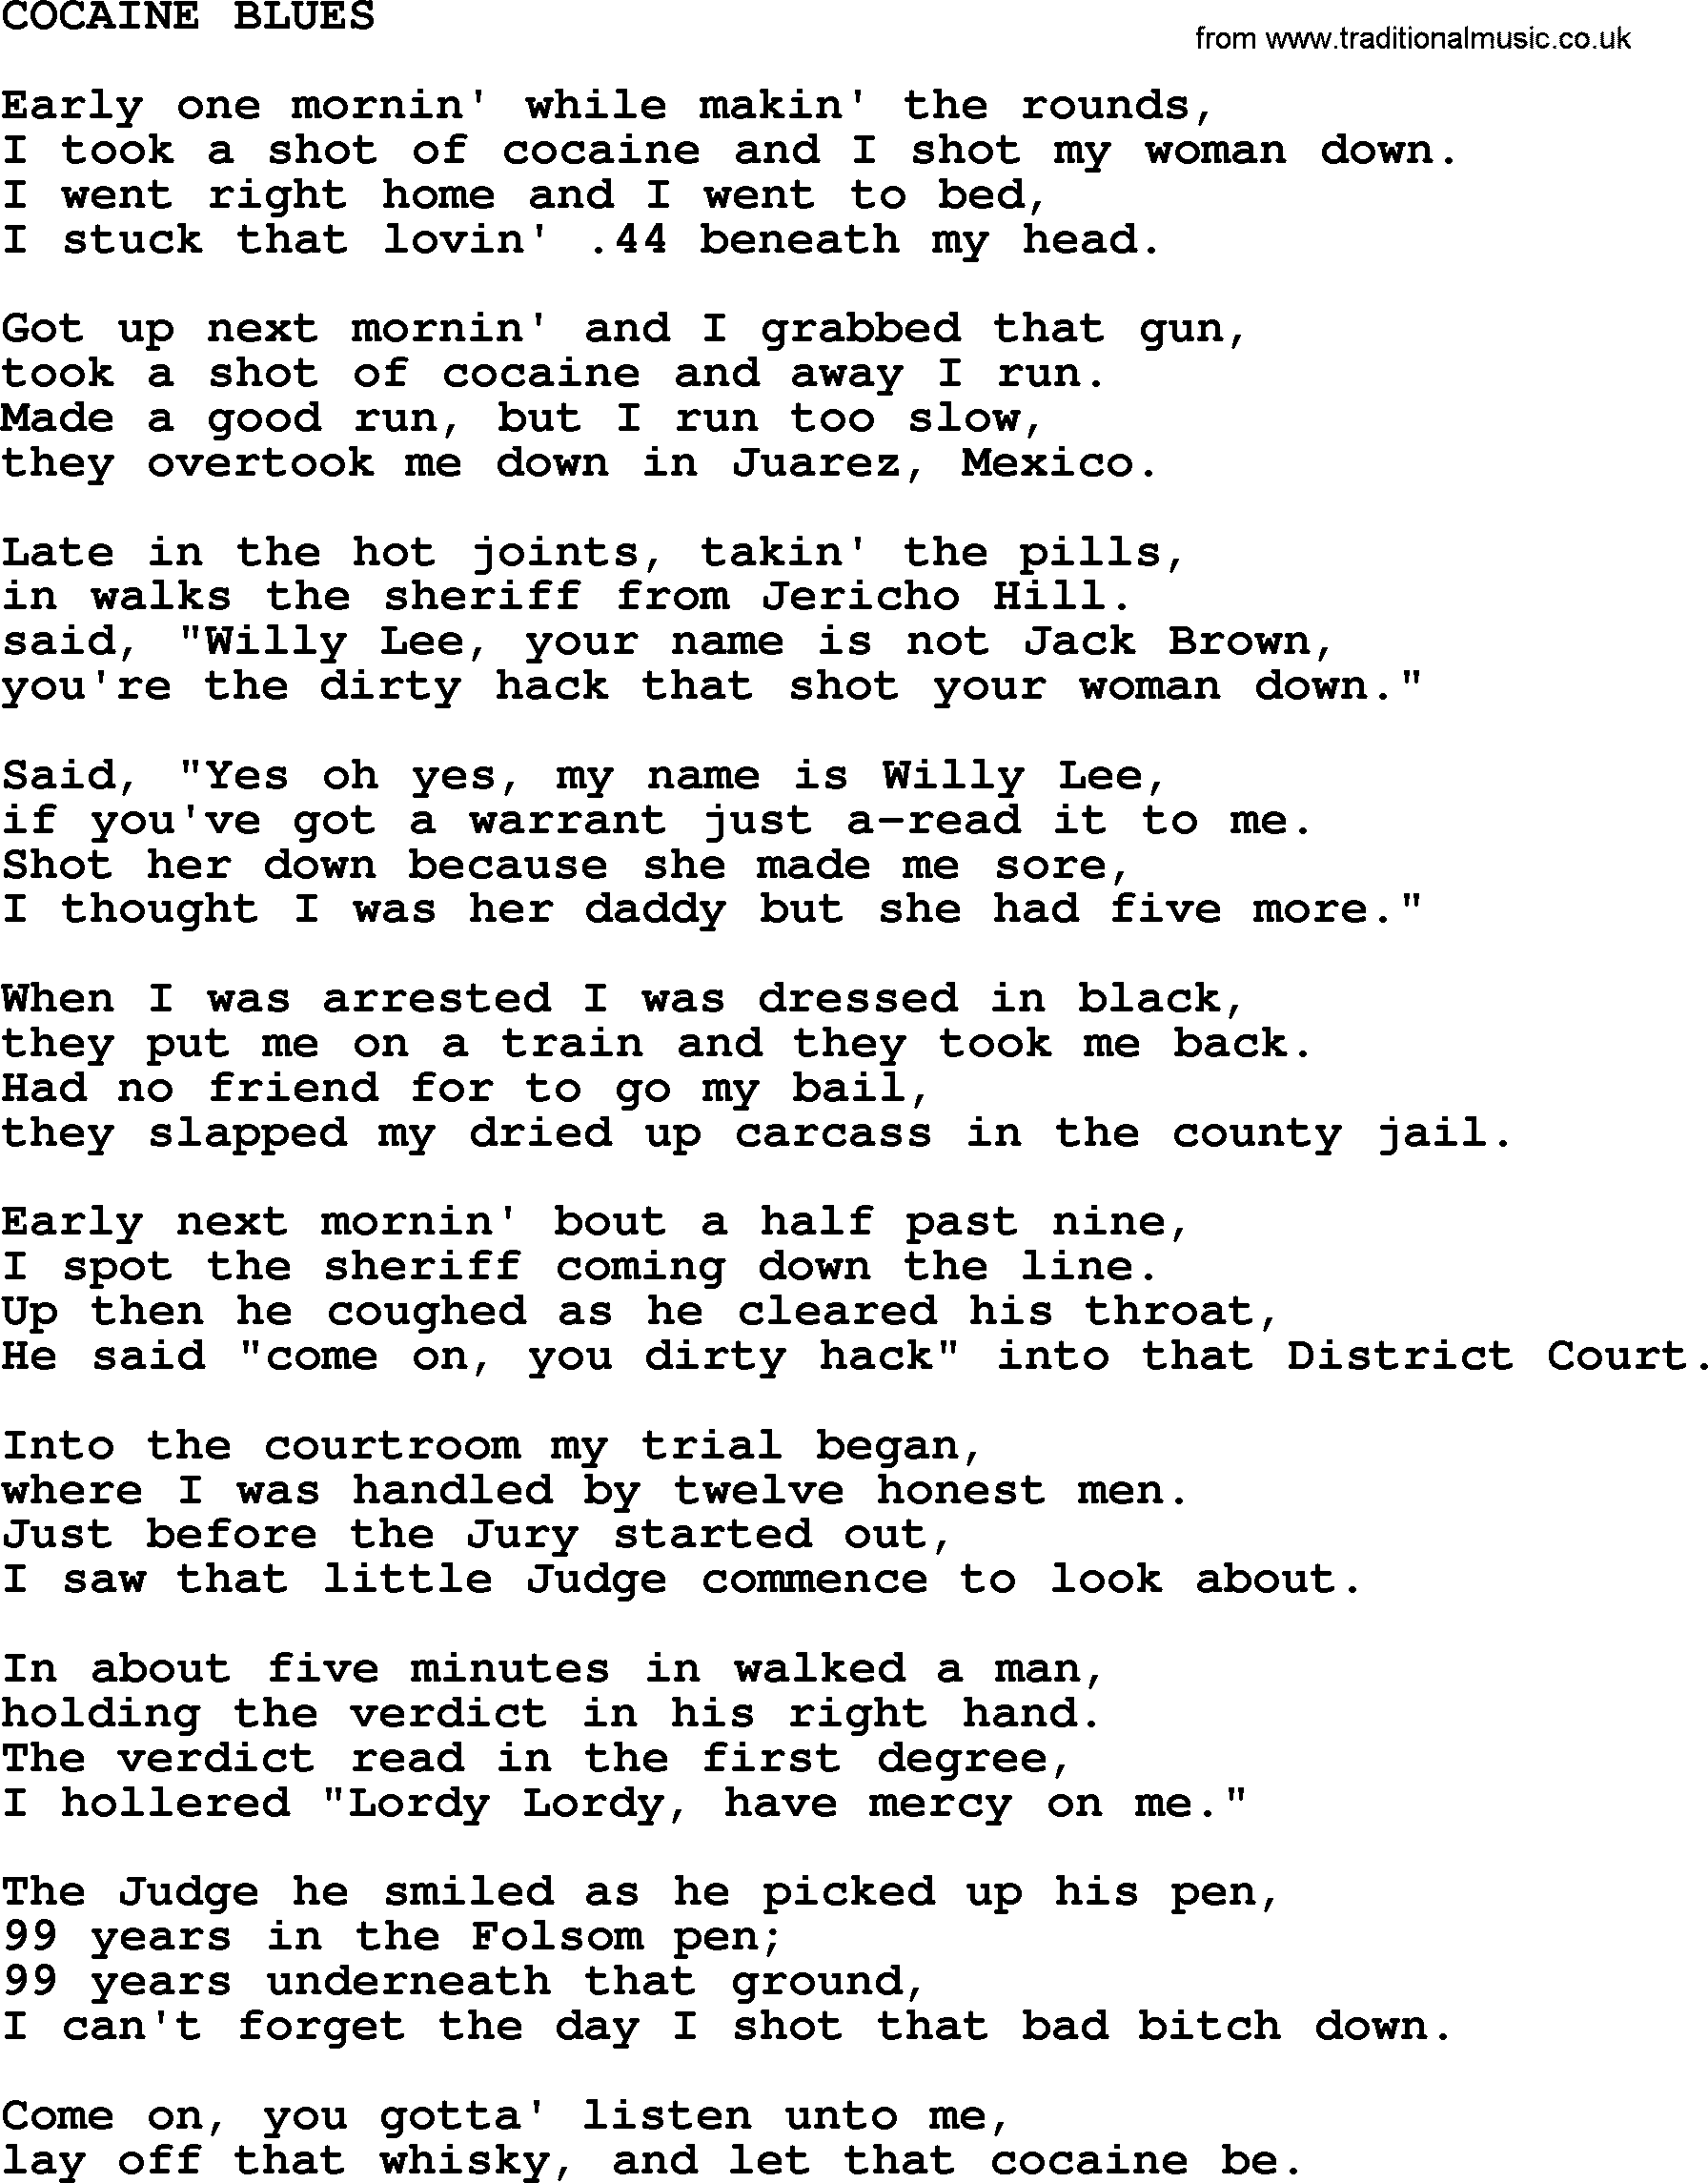 Johnny Cash song: Cocaine Blues, lyrics